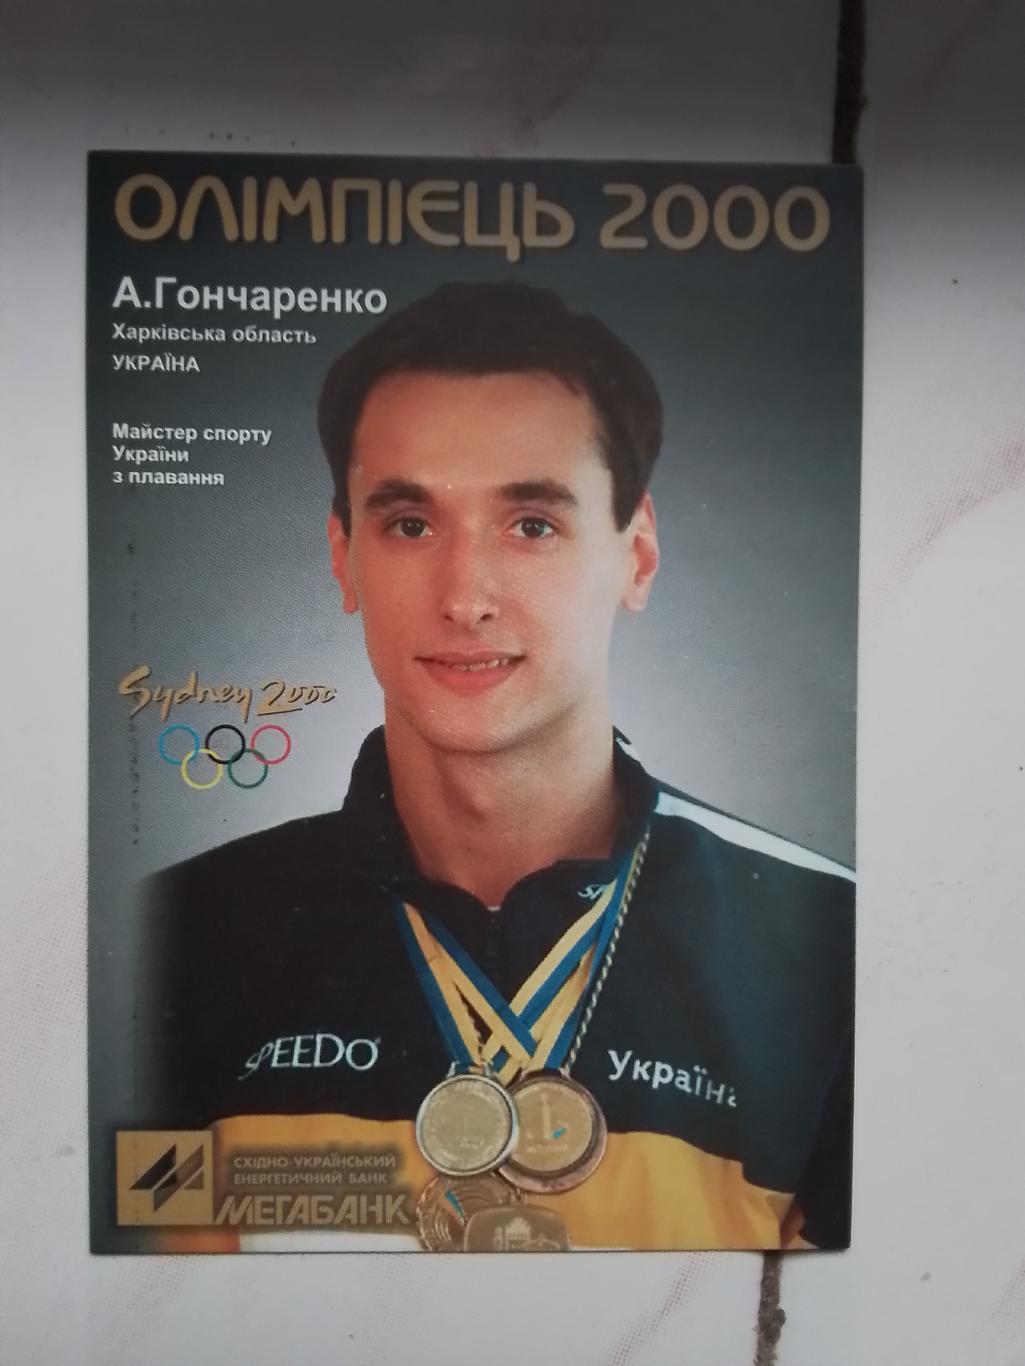 Календарик Олимпиец 2000 Харьков Артем Гончаренко Плаванье